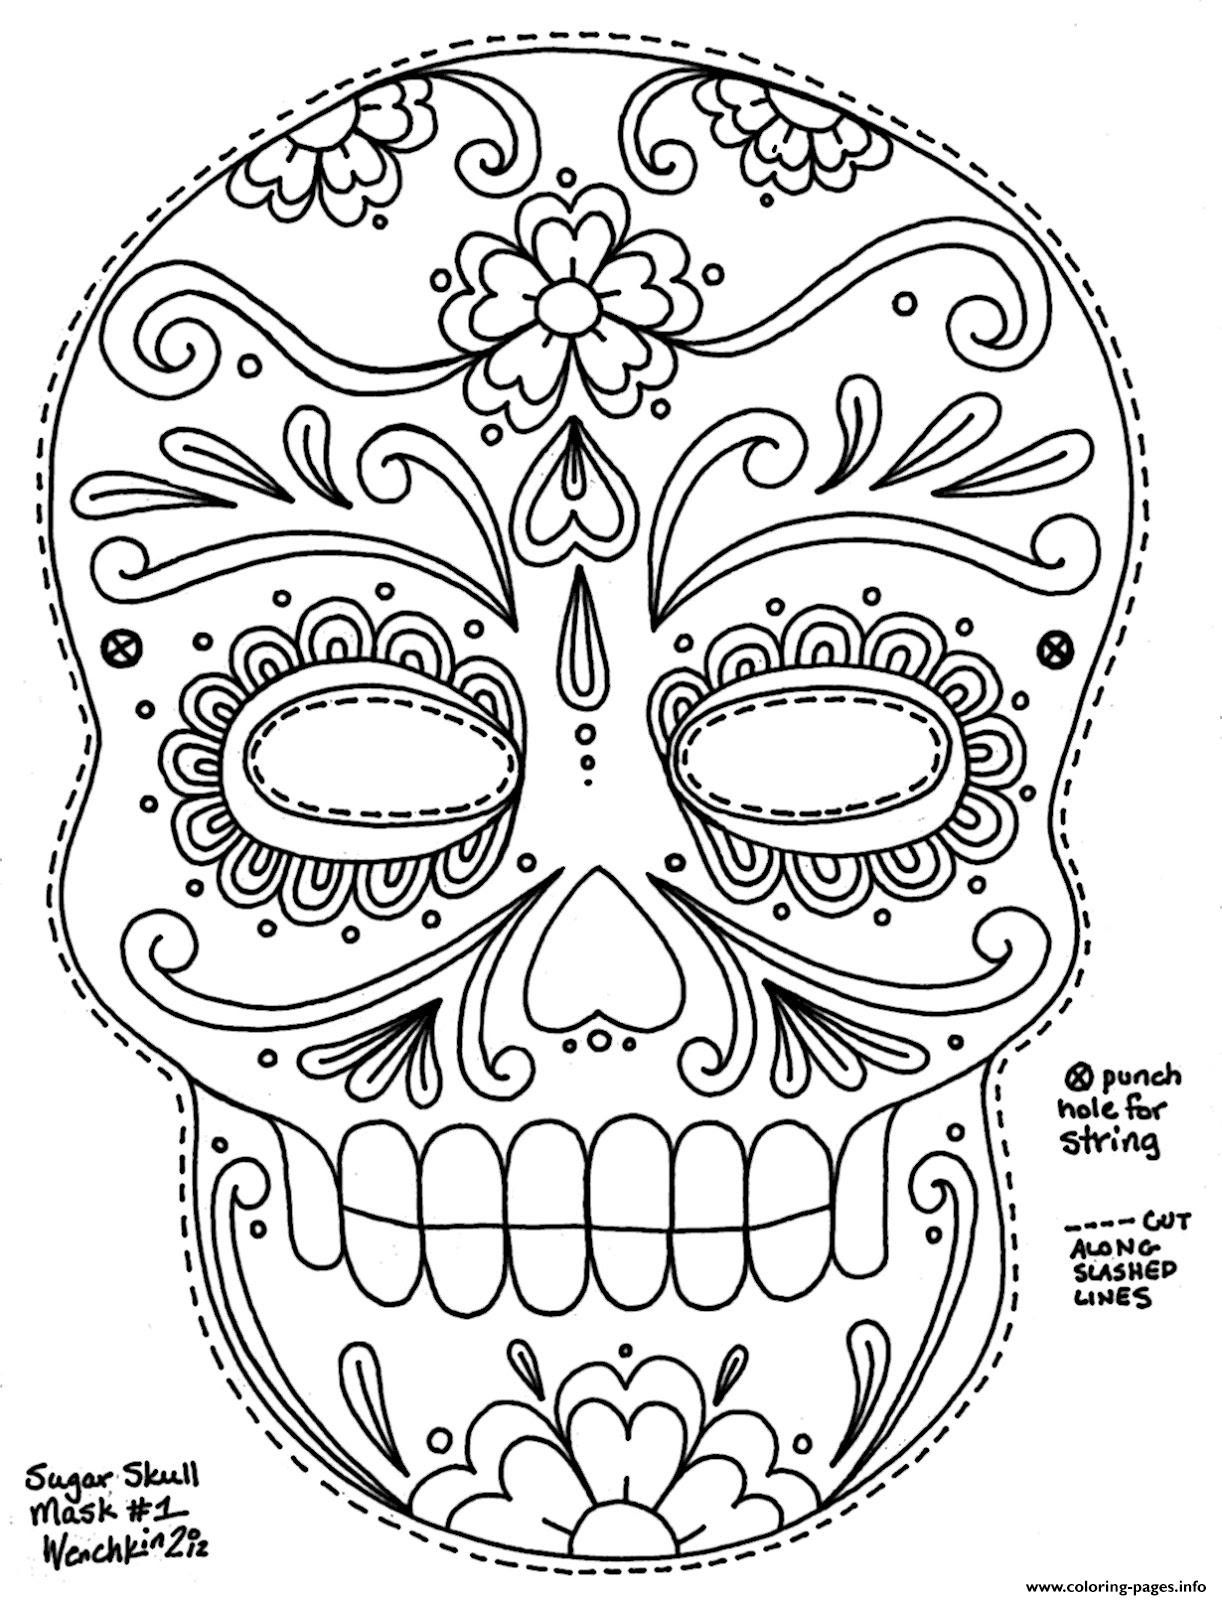 Sugar Skull Coloring Sheet
 Simple Sugar Skull Hd Adult Big Size Coloring Pages Printable